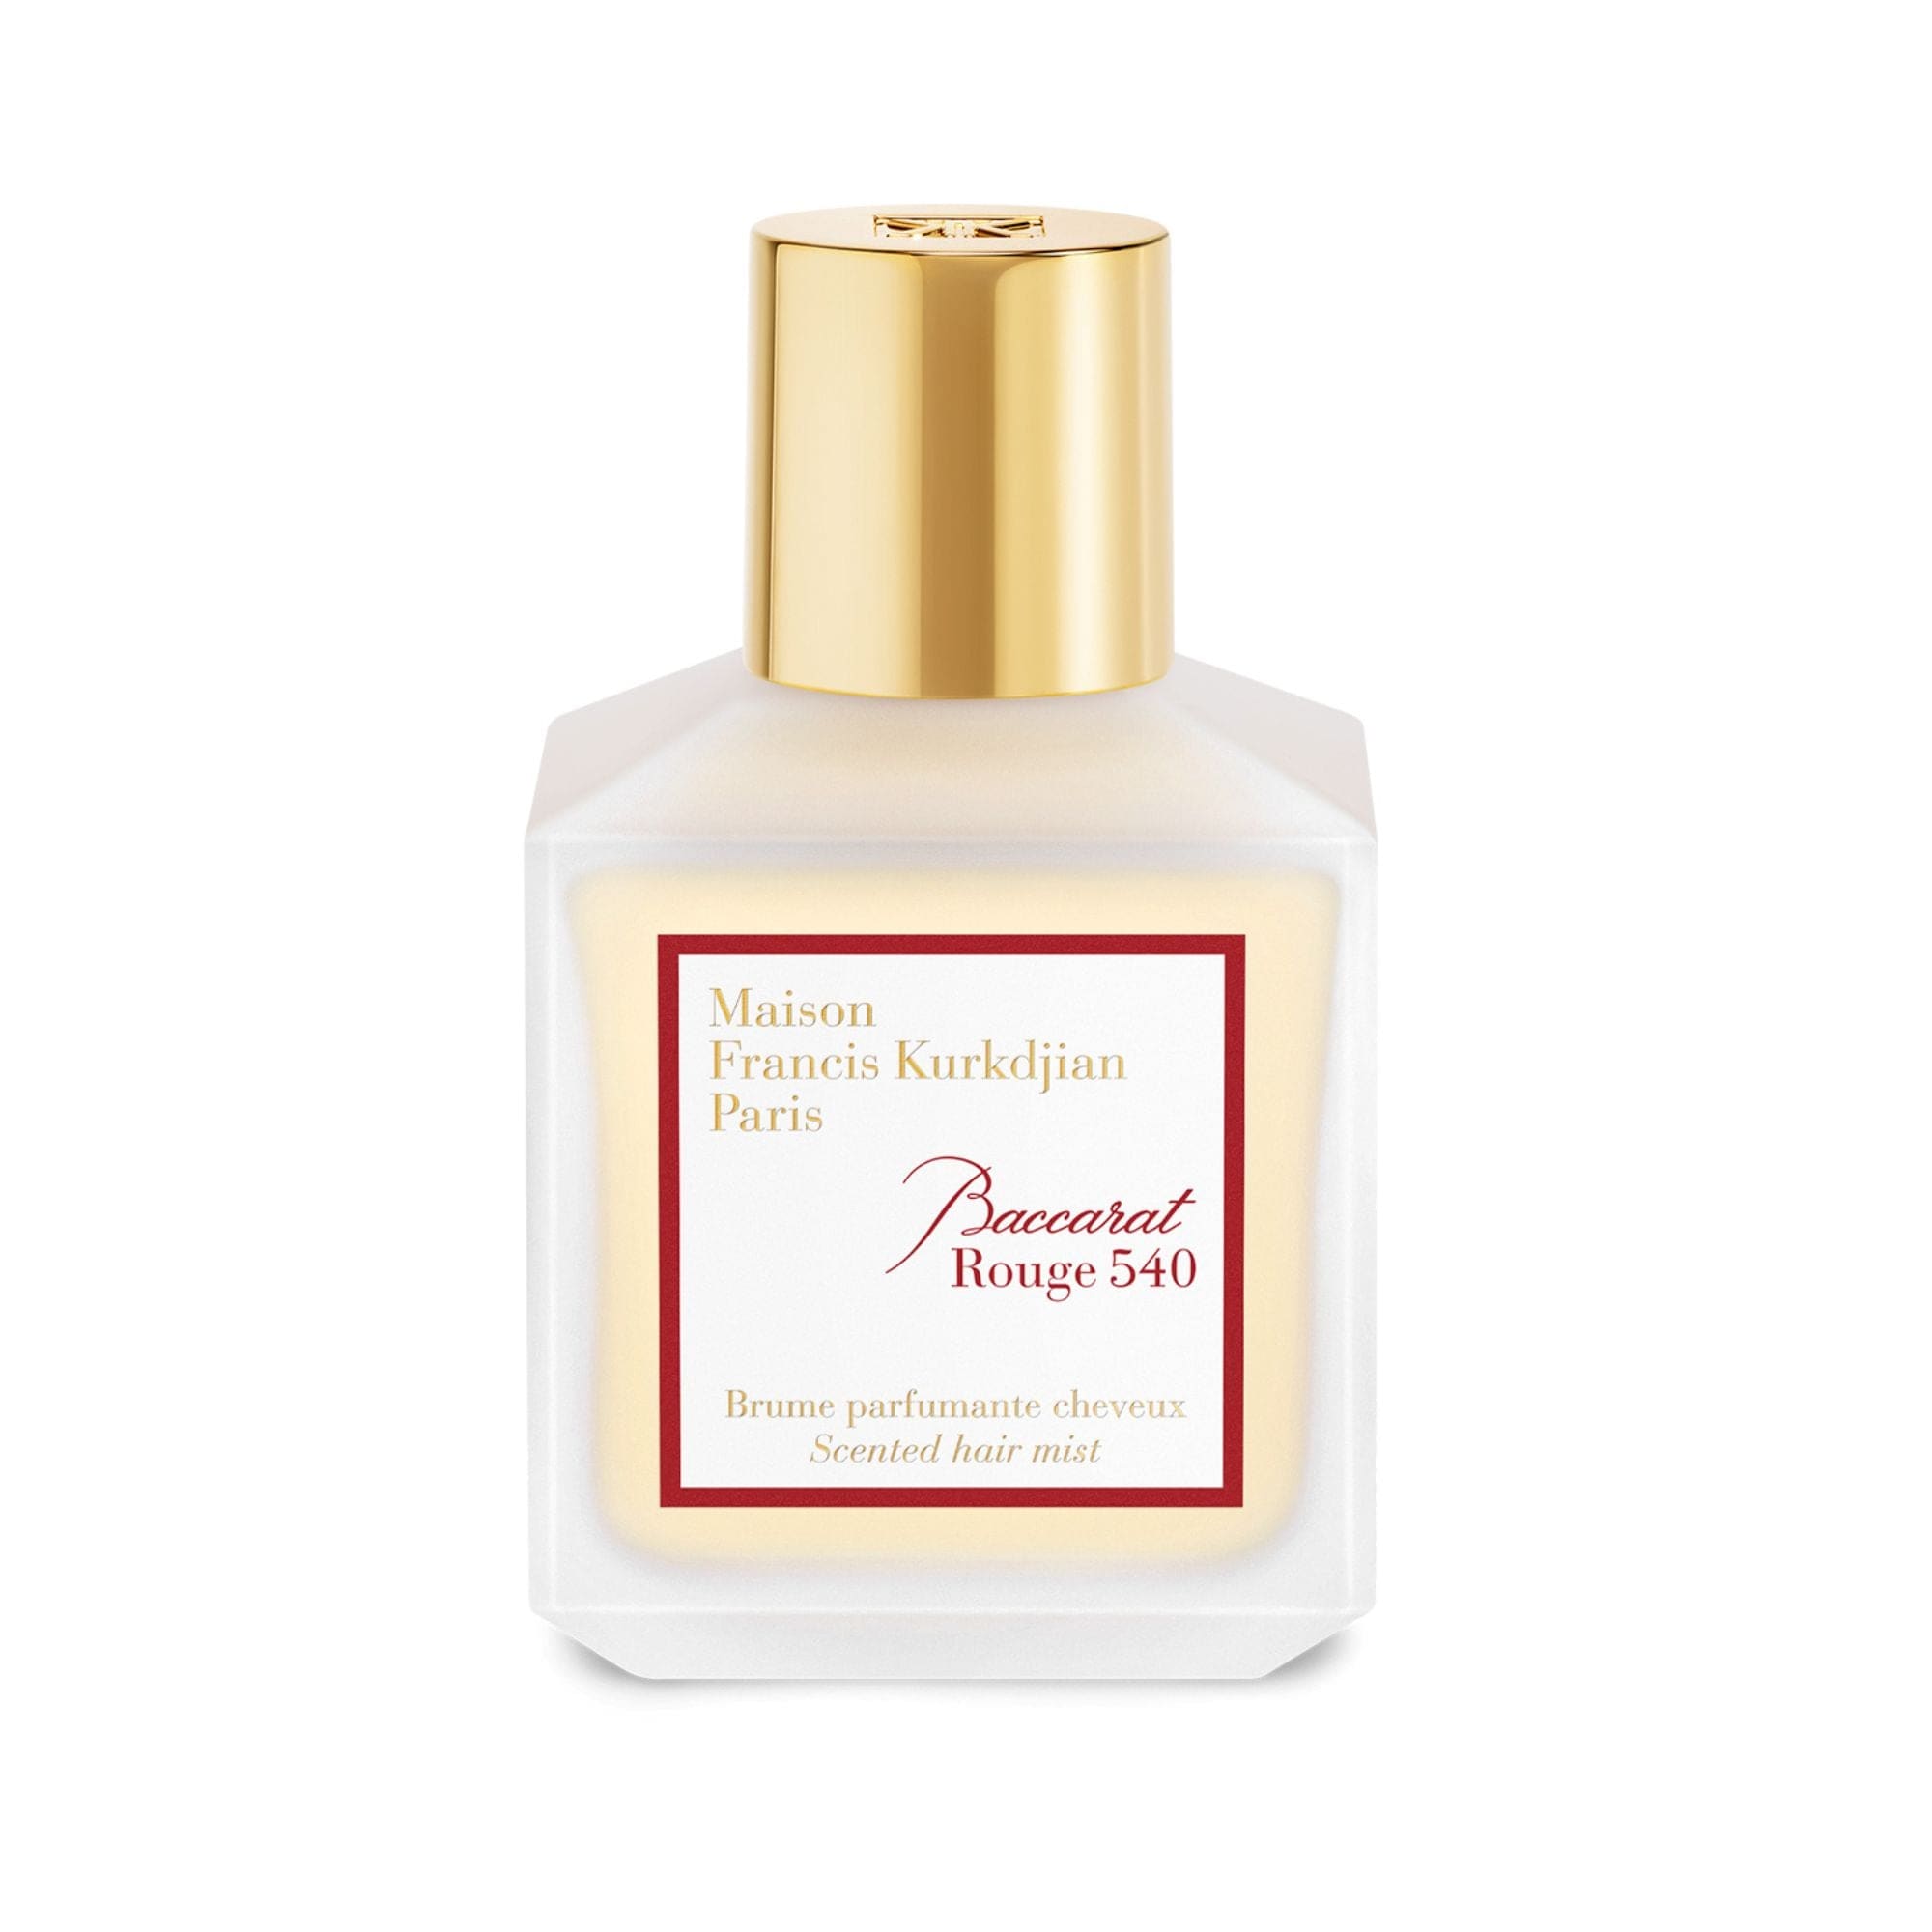 Baccarat Rouge 540 Maison Francis Kurkdjian Perfume para el cabello